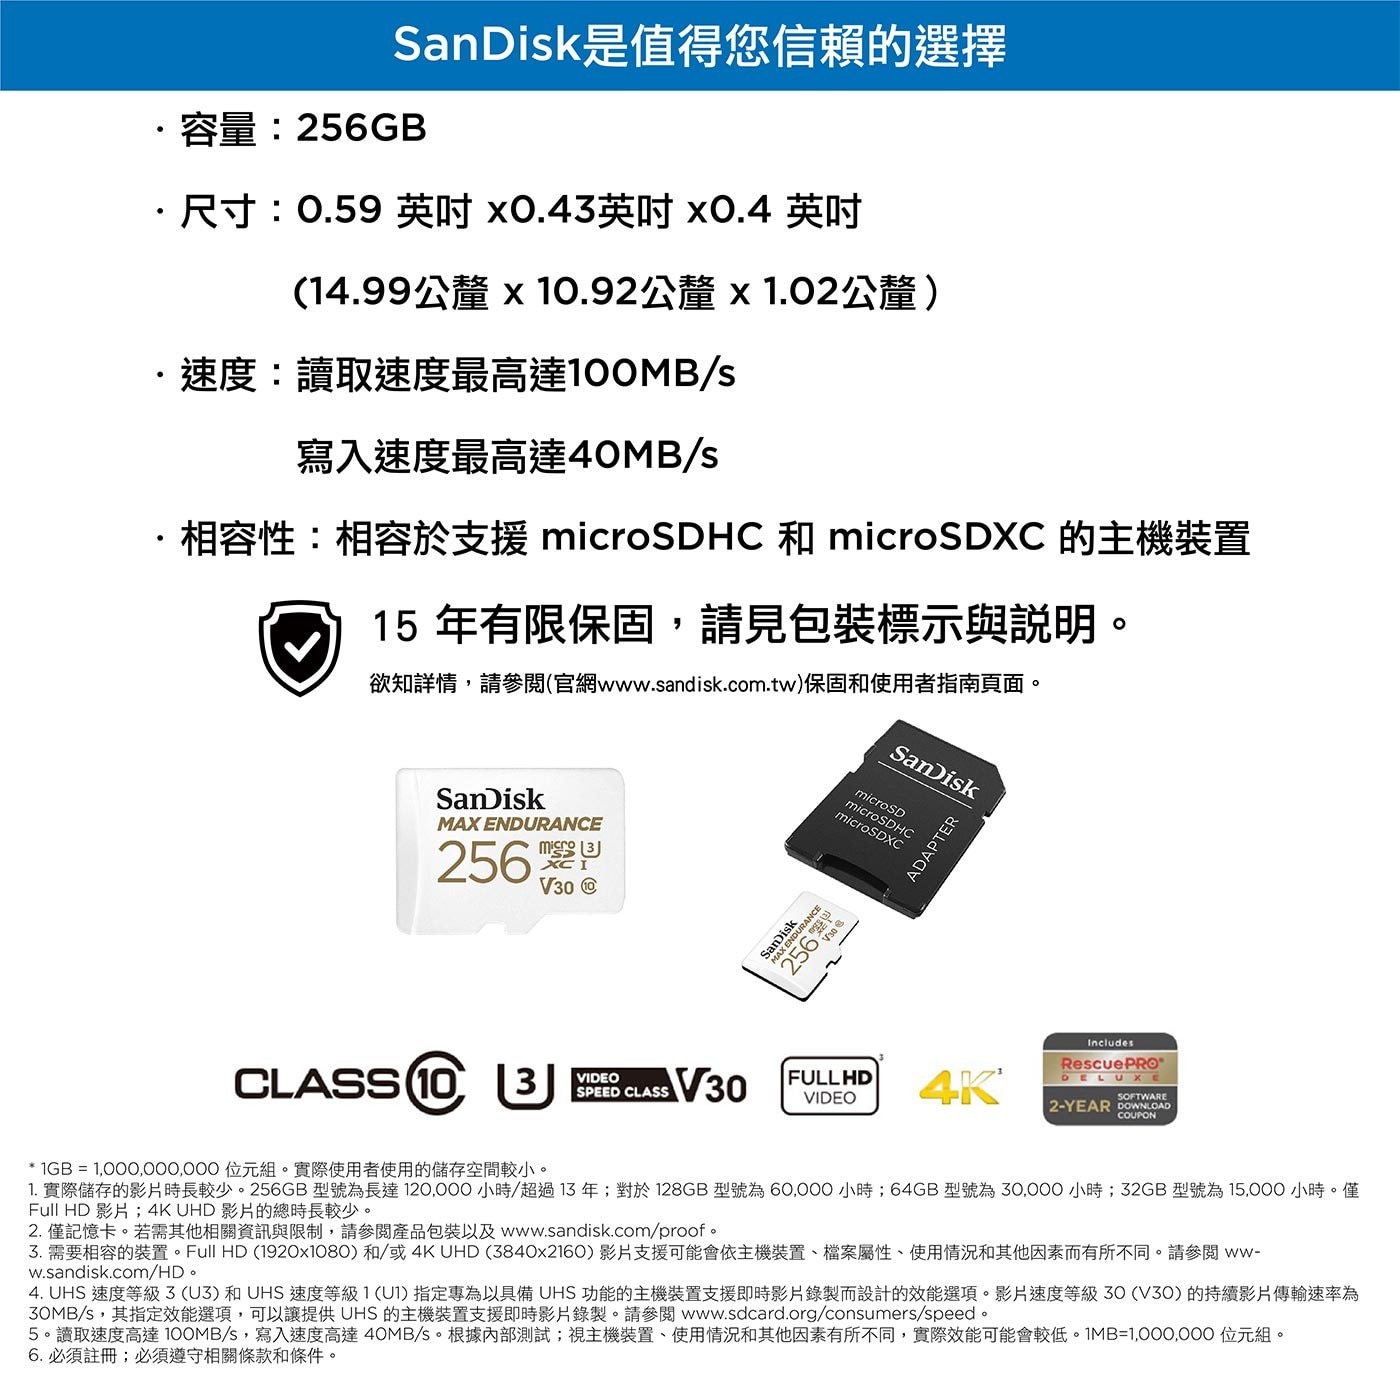 SanDisk 256GB 極致耐寫度 microSDXC 記憶卡含SD轉接卡讀取速度最高可達 100MB/S；寫入速度最高可達 40MB/S。這款 microSD 記憶卡專為高耐久度而設計，其耐高溫抗極寒、防水、防震且抗 X 光的耐用性可經受各種嚴苛天氣環境。